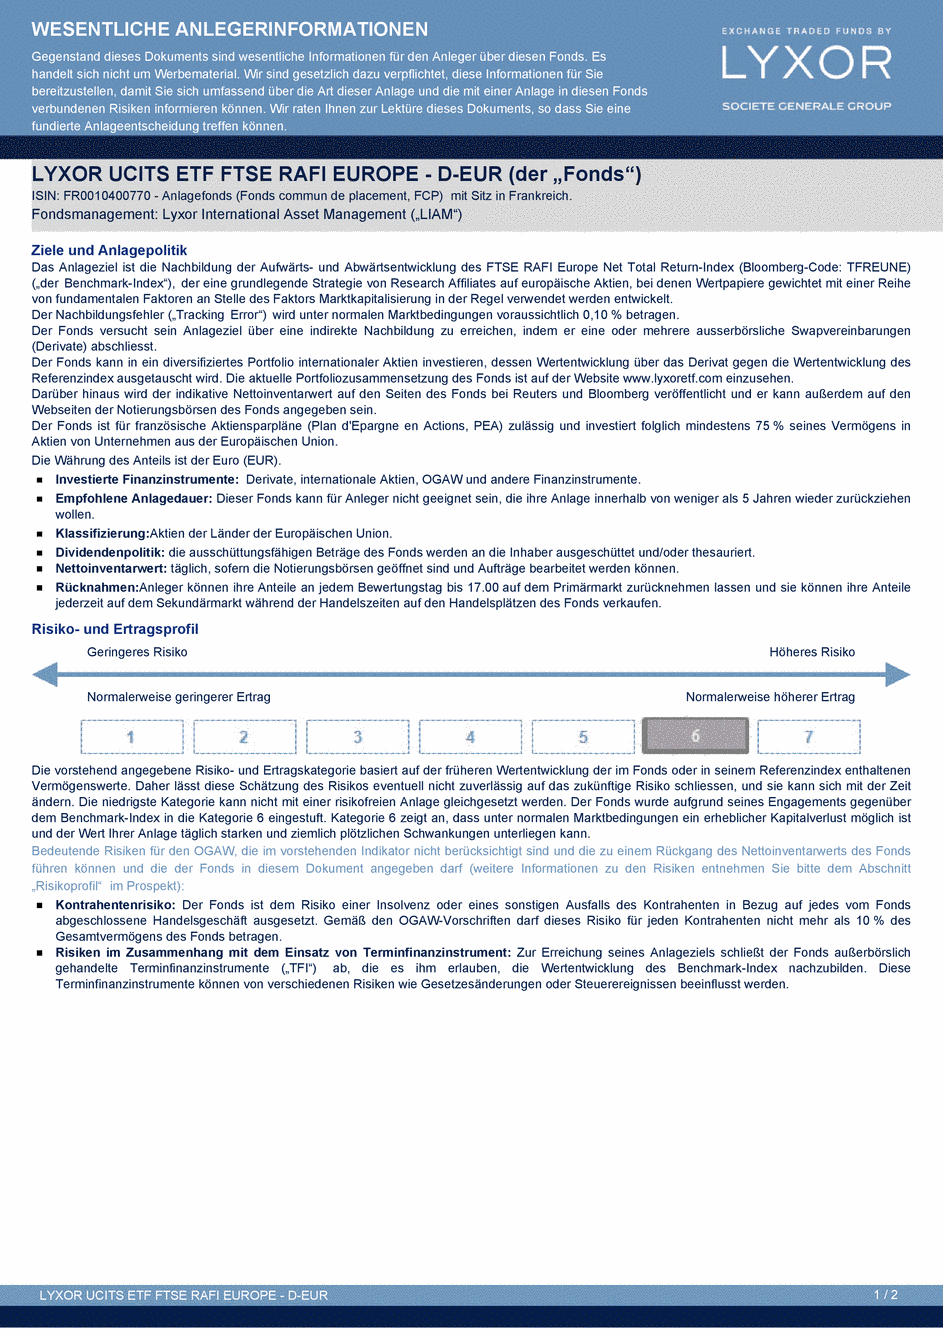 DICI LYXOR UCITS ETF FTSE RAFI EUROPE D-EUR - 13/02/2015 - Allemand